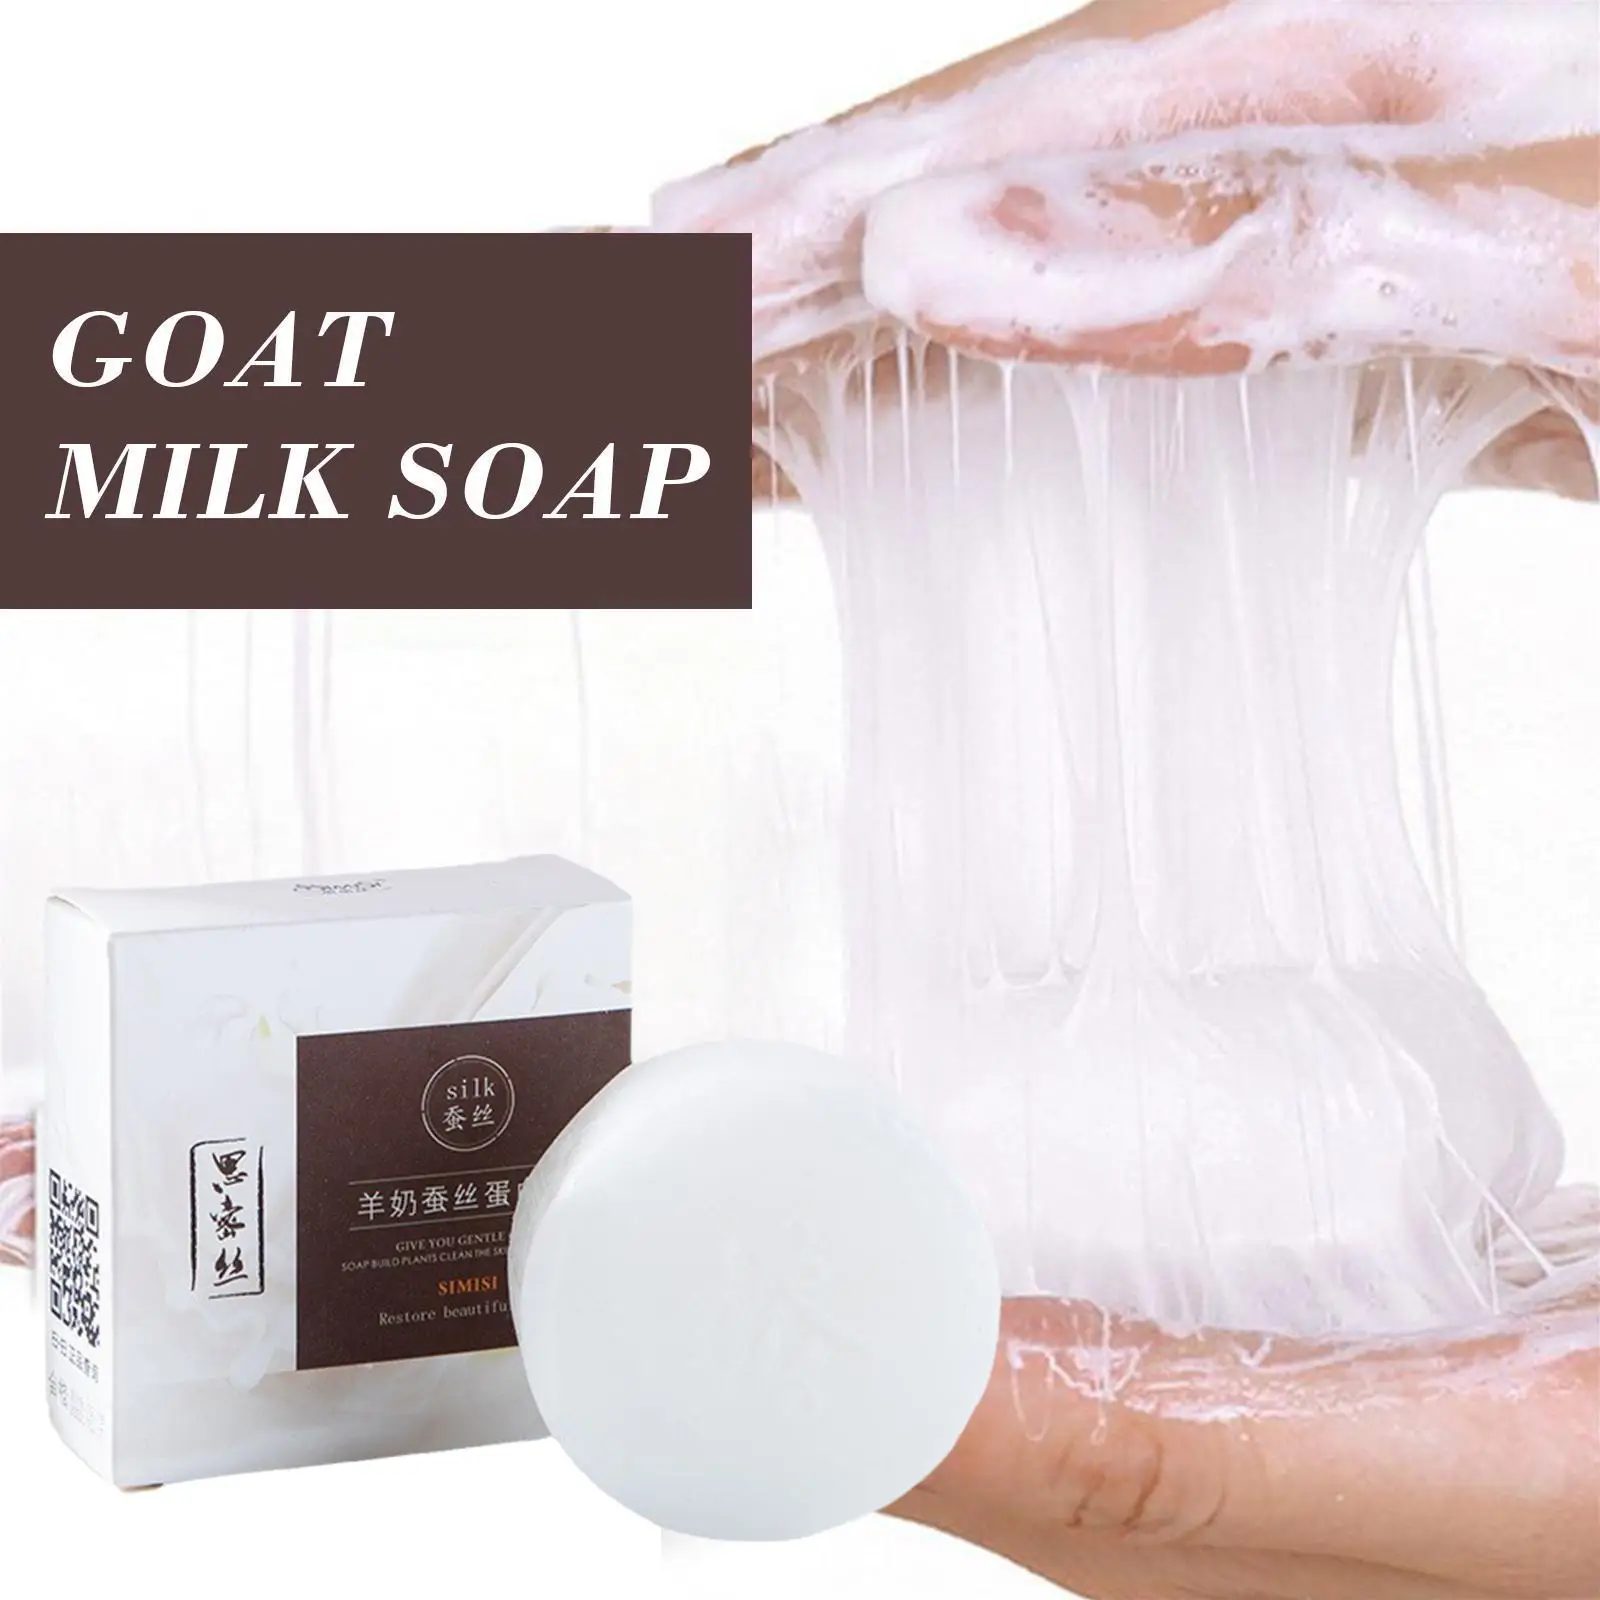 

Goat Milk Soap Original Wholesale Handmade Soap Rice Milk Whitening Soap Goat Milk Soap Protein Soap For Whitening Facial S L2R3